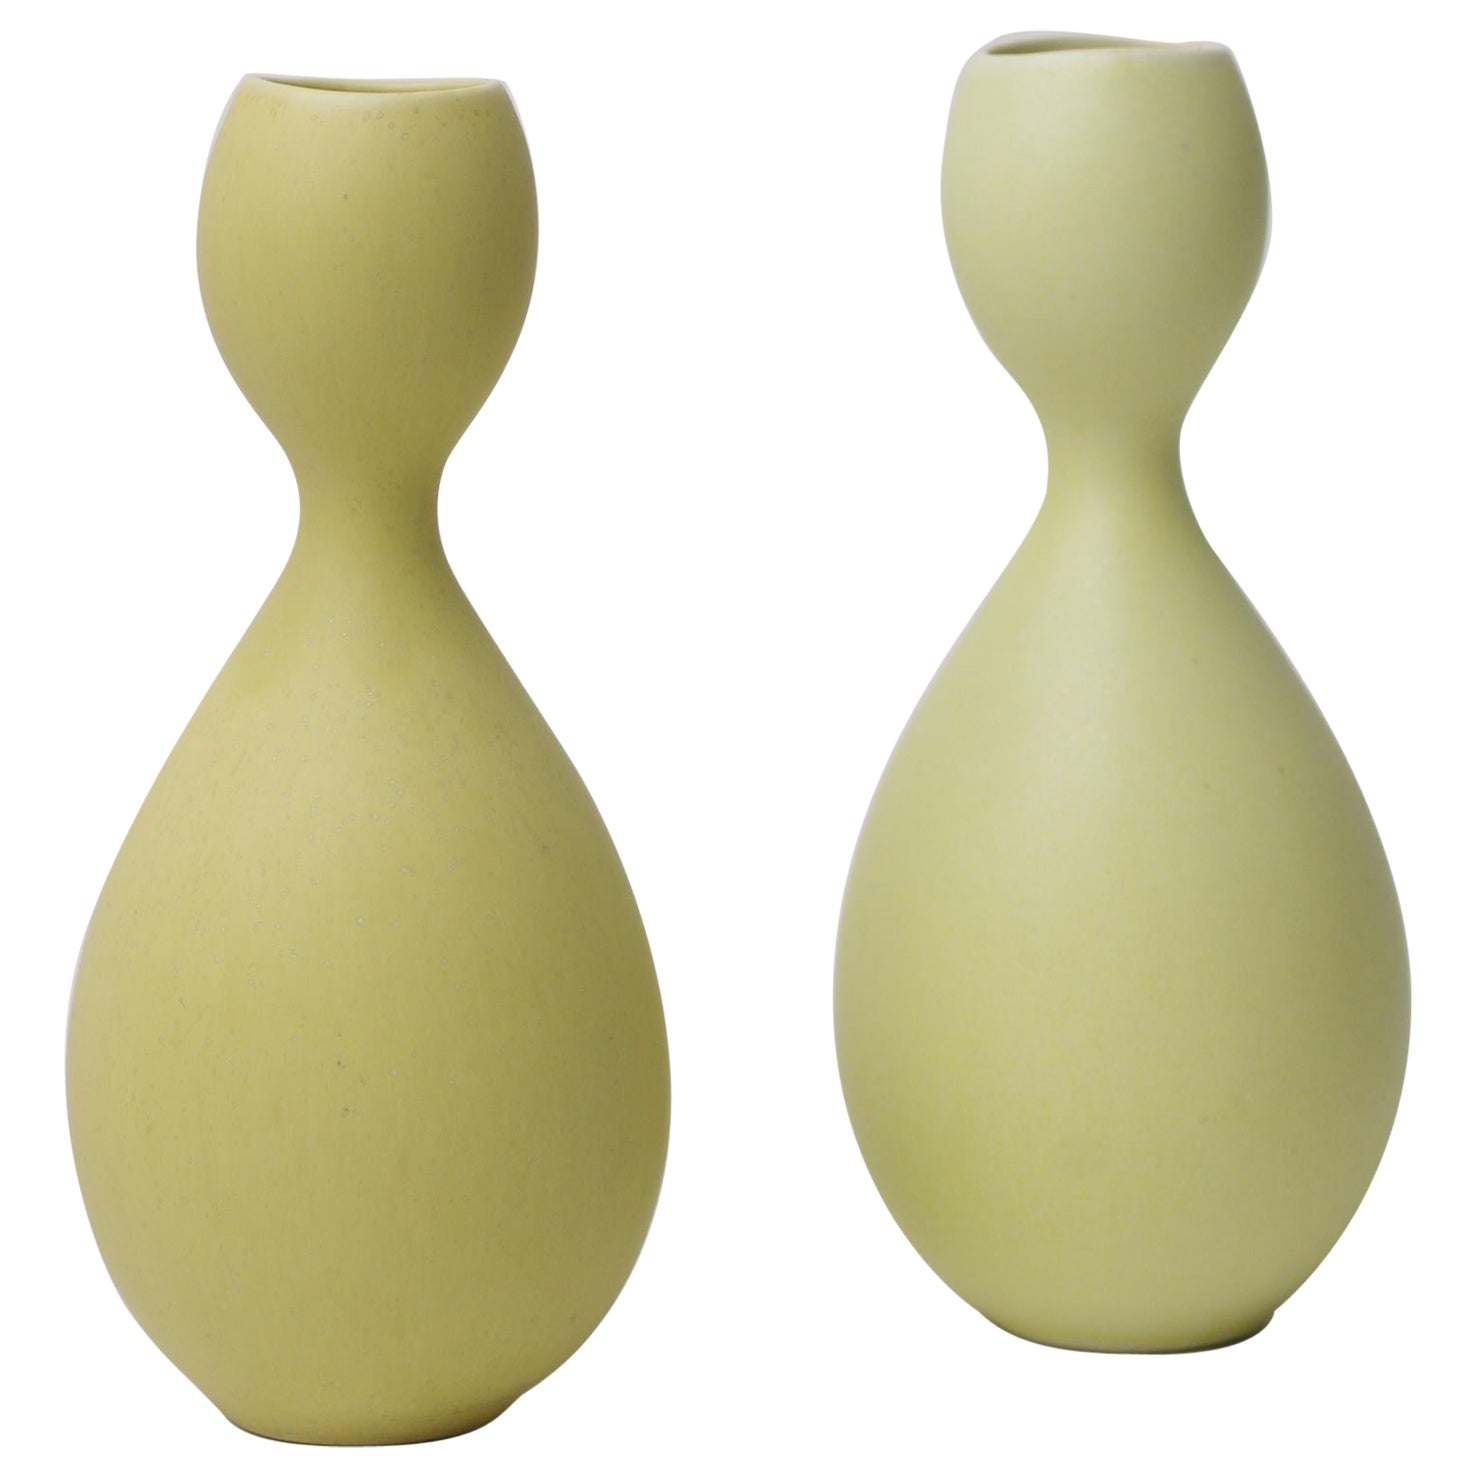 Stig Lindberg - Vitrin - 2 vases For Sale